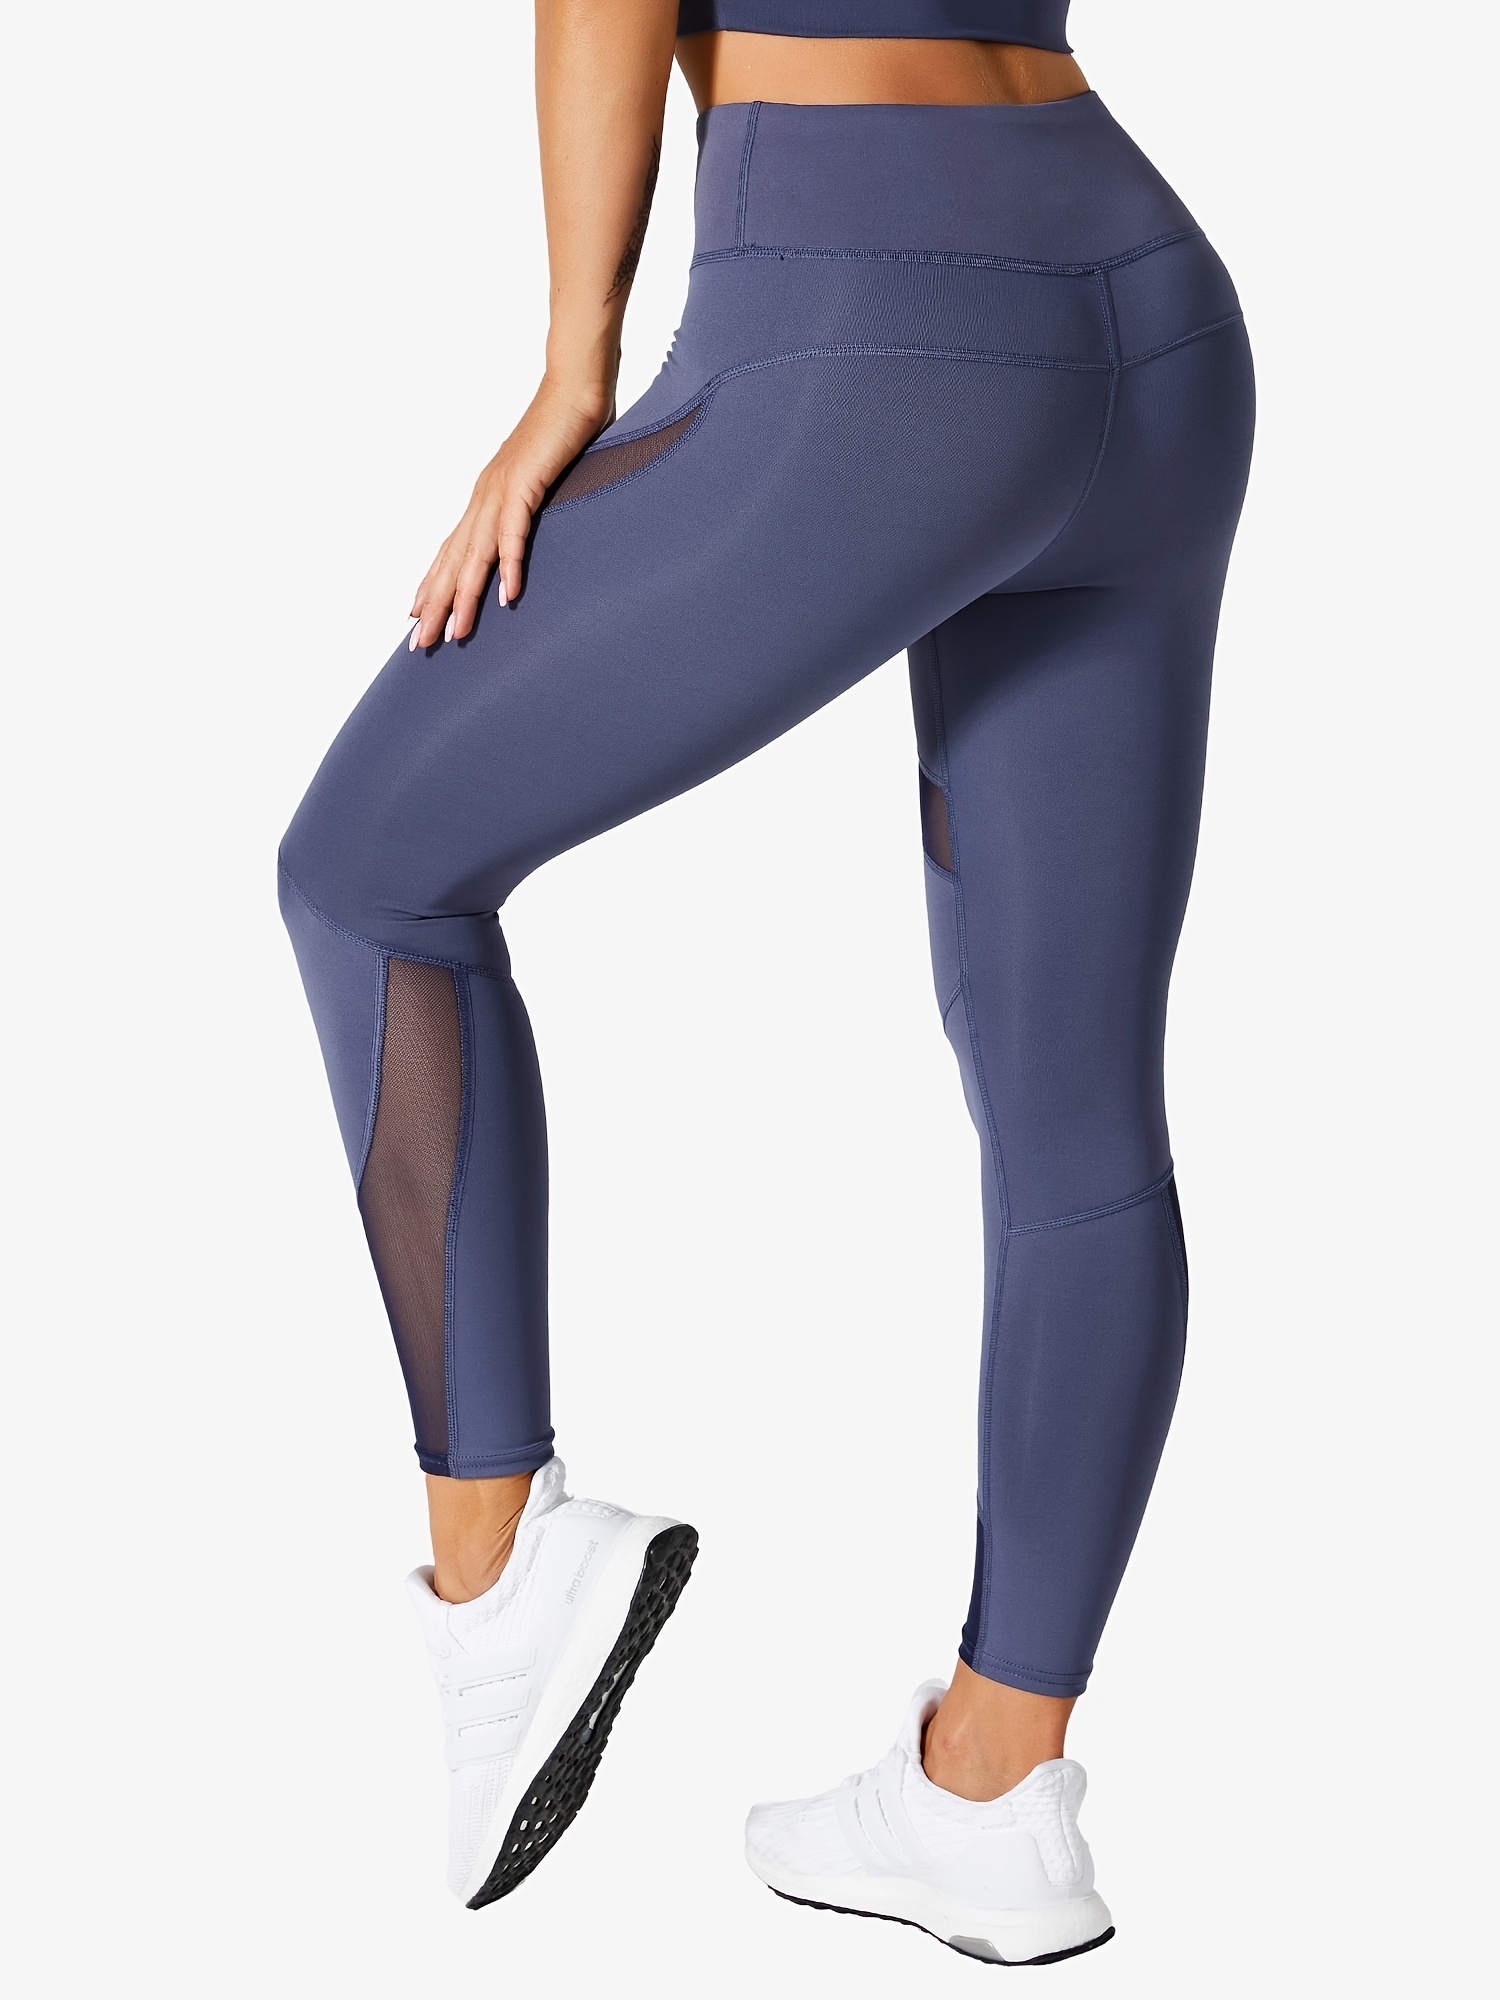 Mallas Yoga Mujer - Pantalones De Yoga - AliExpress